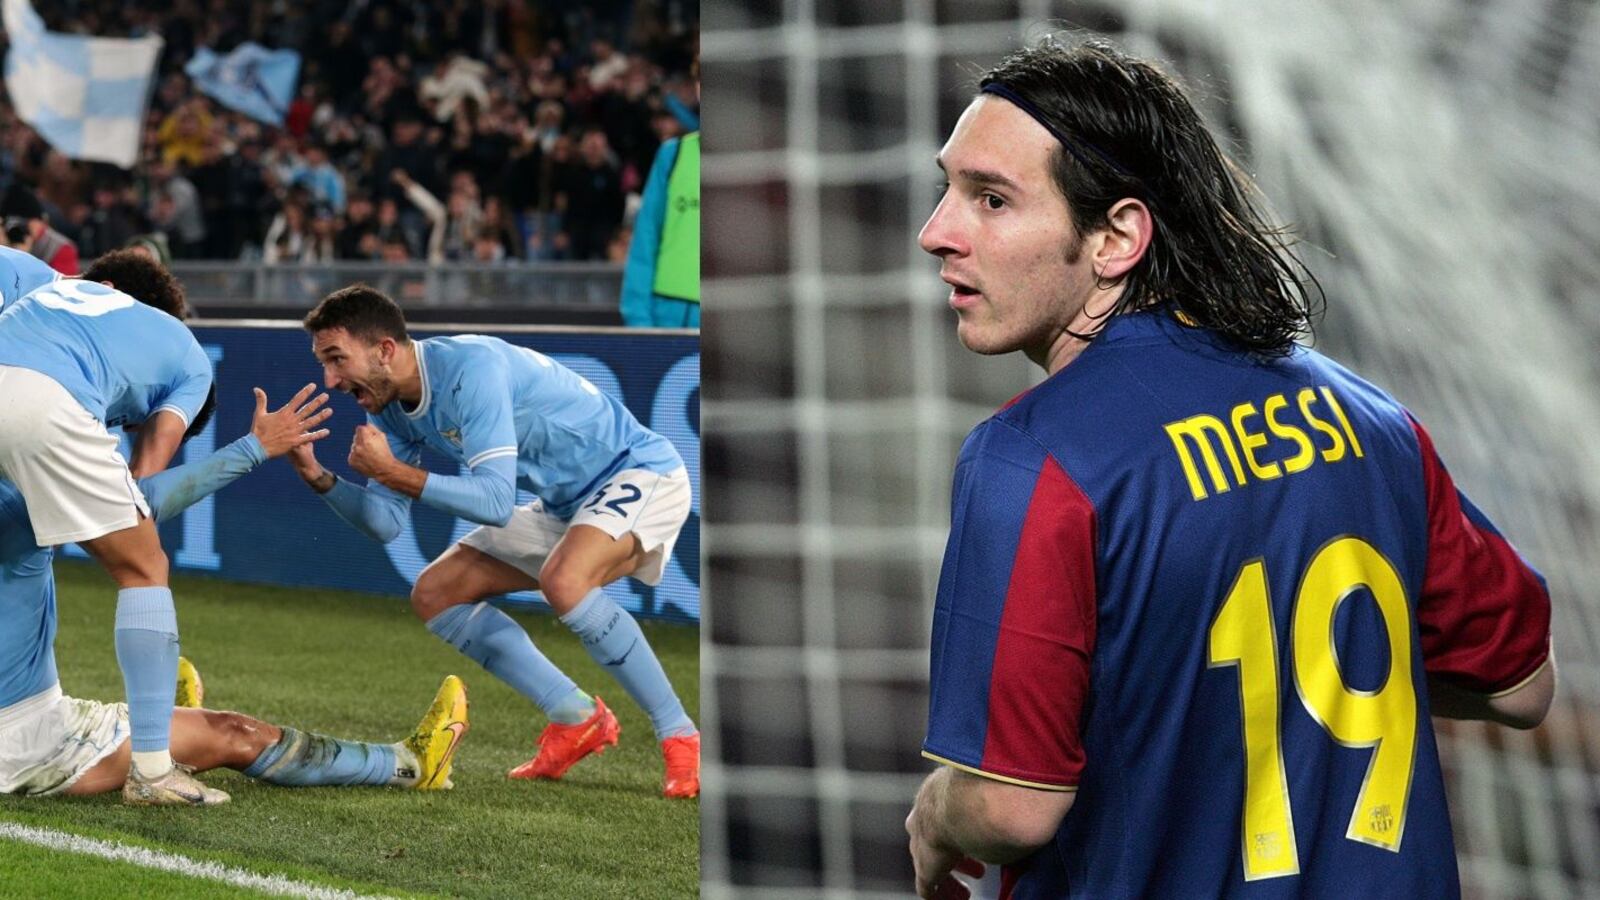 Era el nuevo Messi, hizo historia en LaLiga, desapareció y ahora resucitó en la Serie A